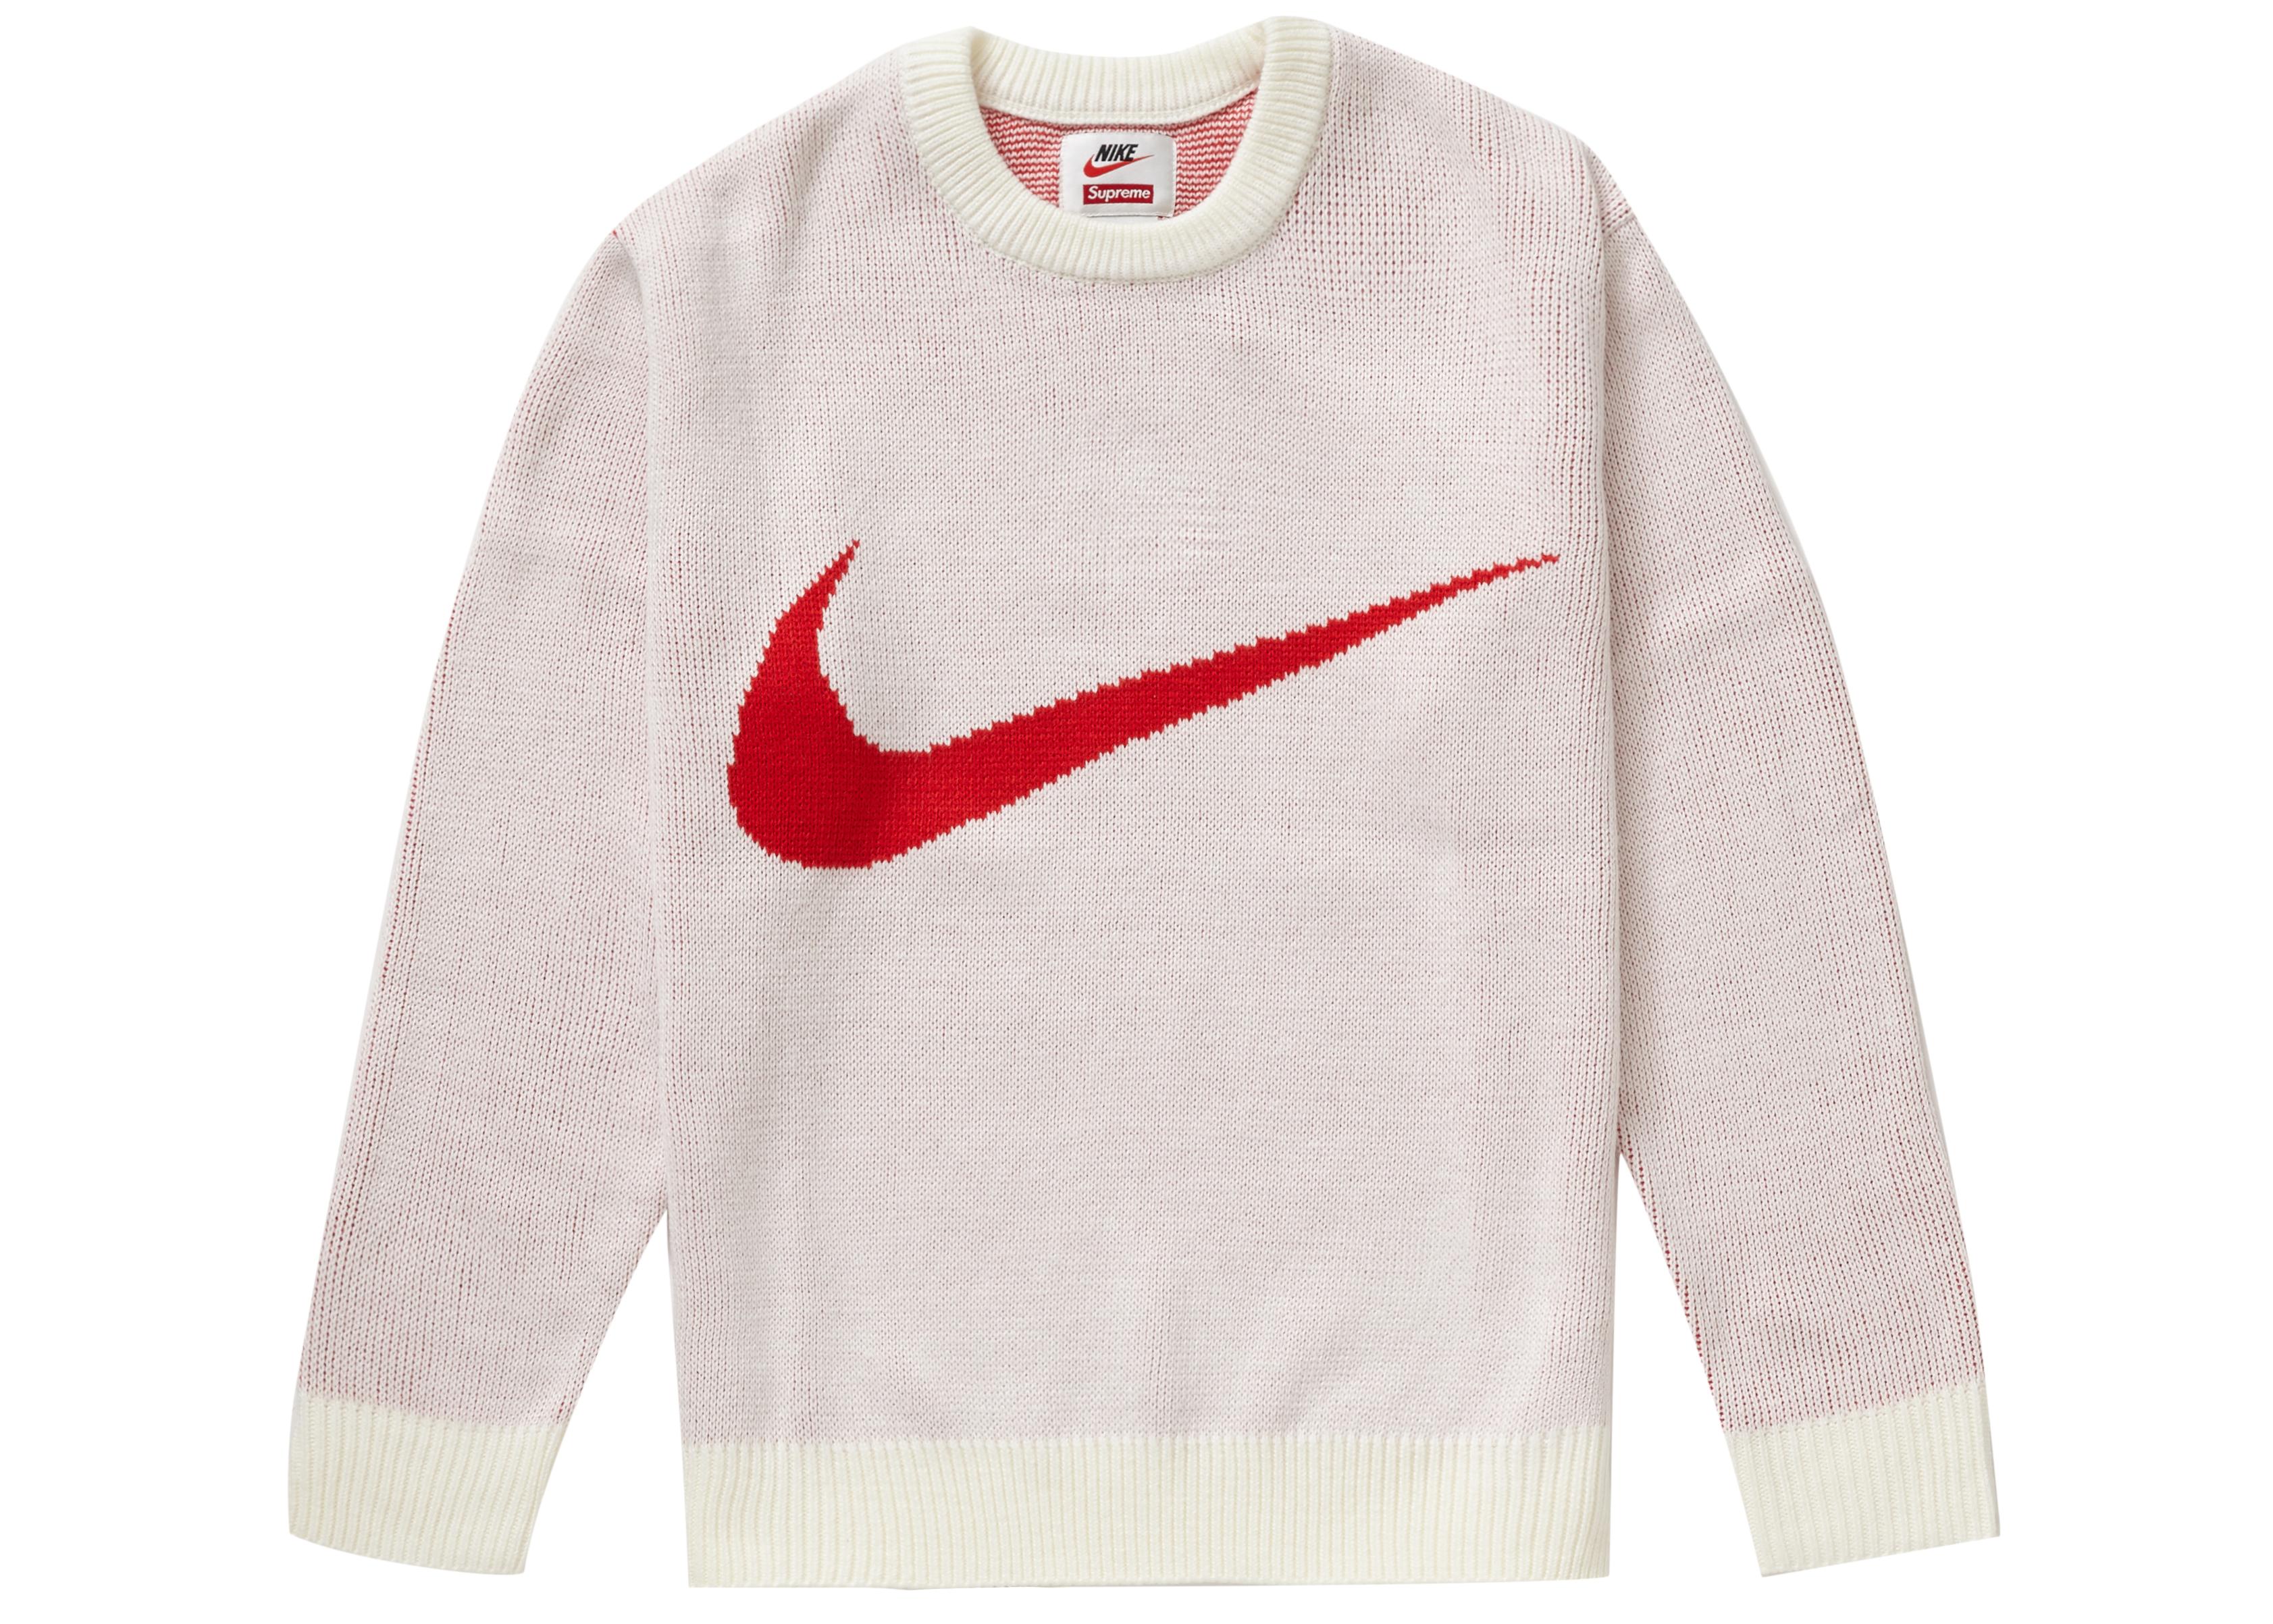 Supreme Nike Swoosh Sweater in White 